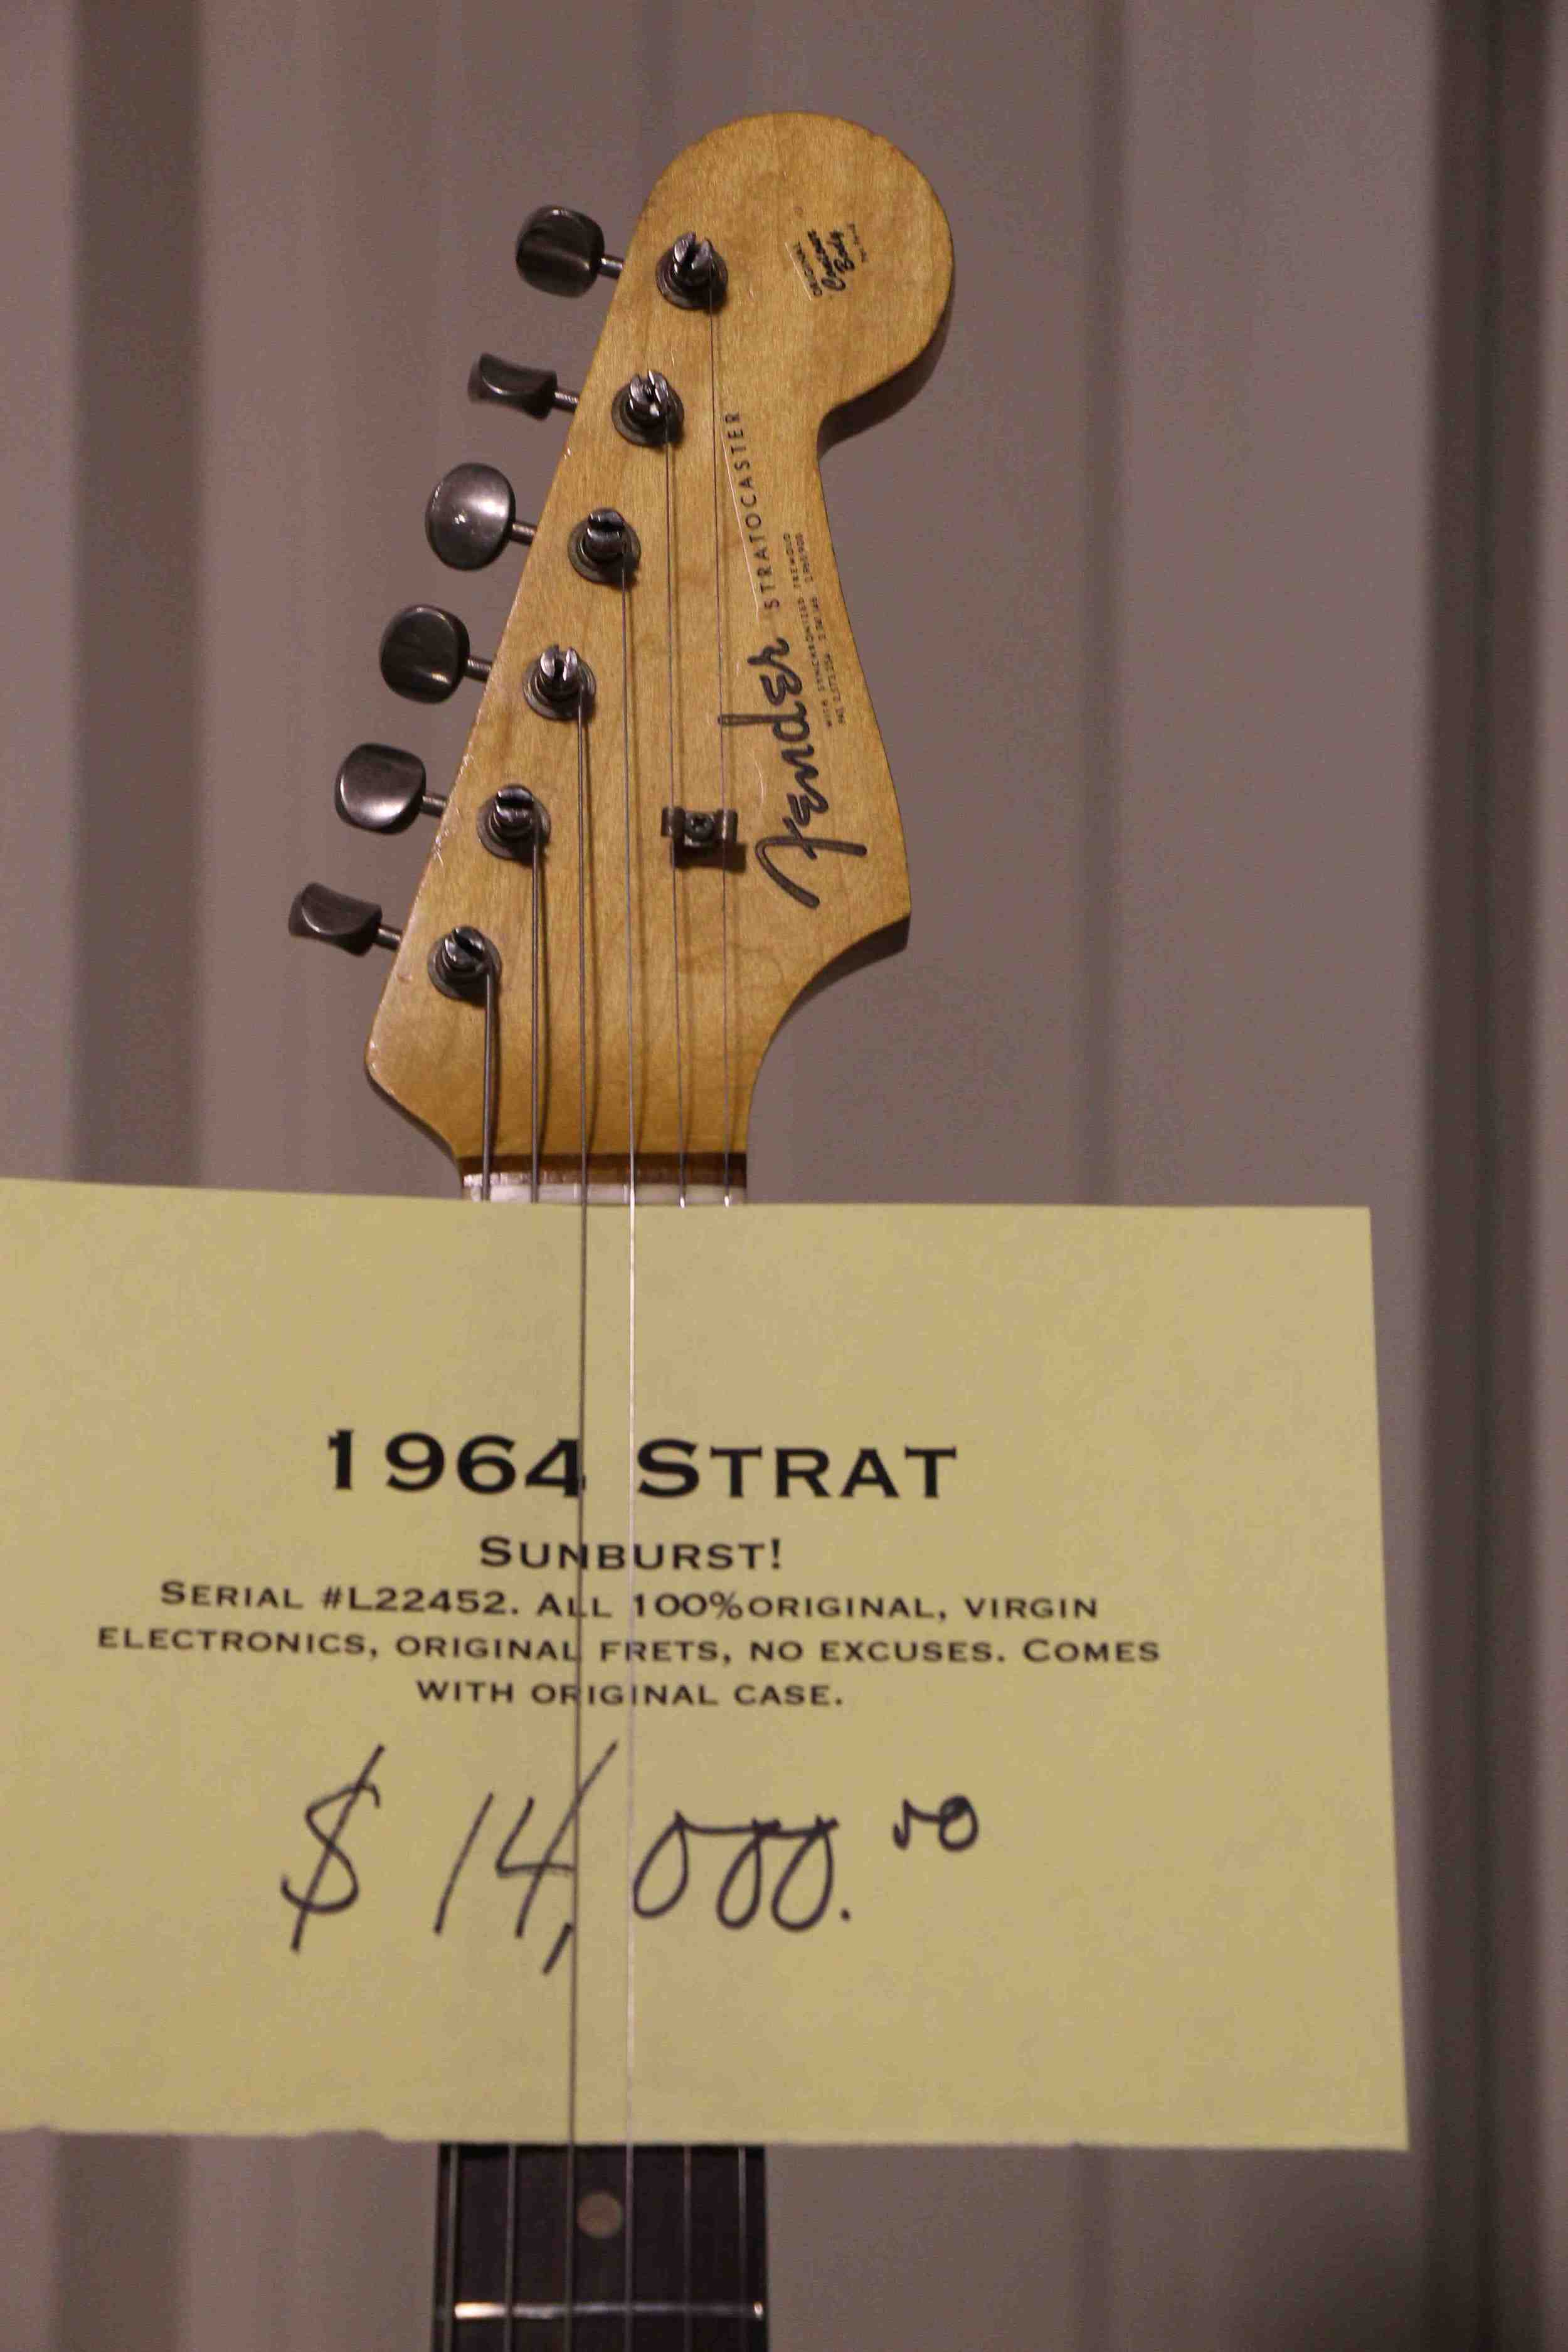 1964 fender stratocaster price tag.jpg